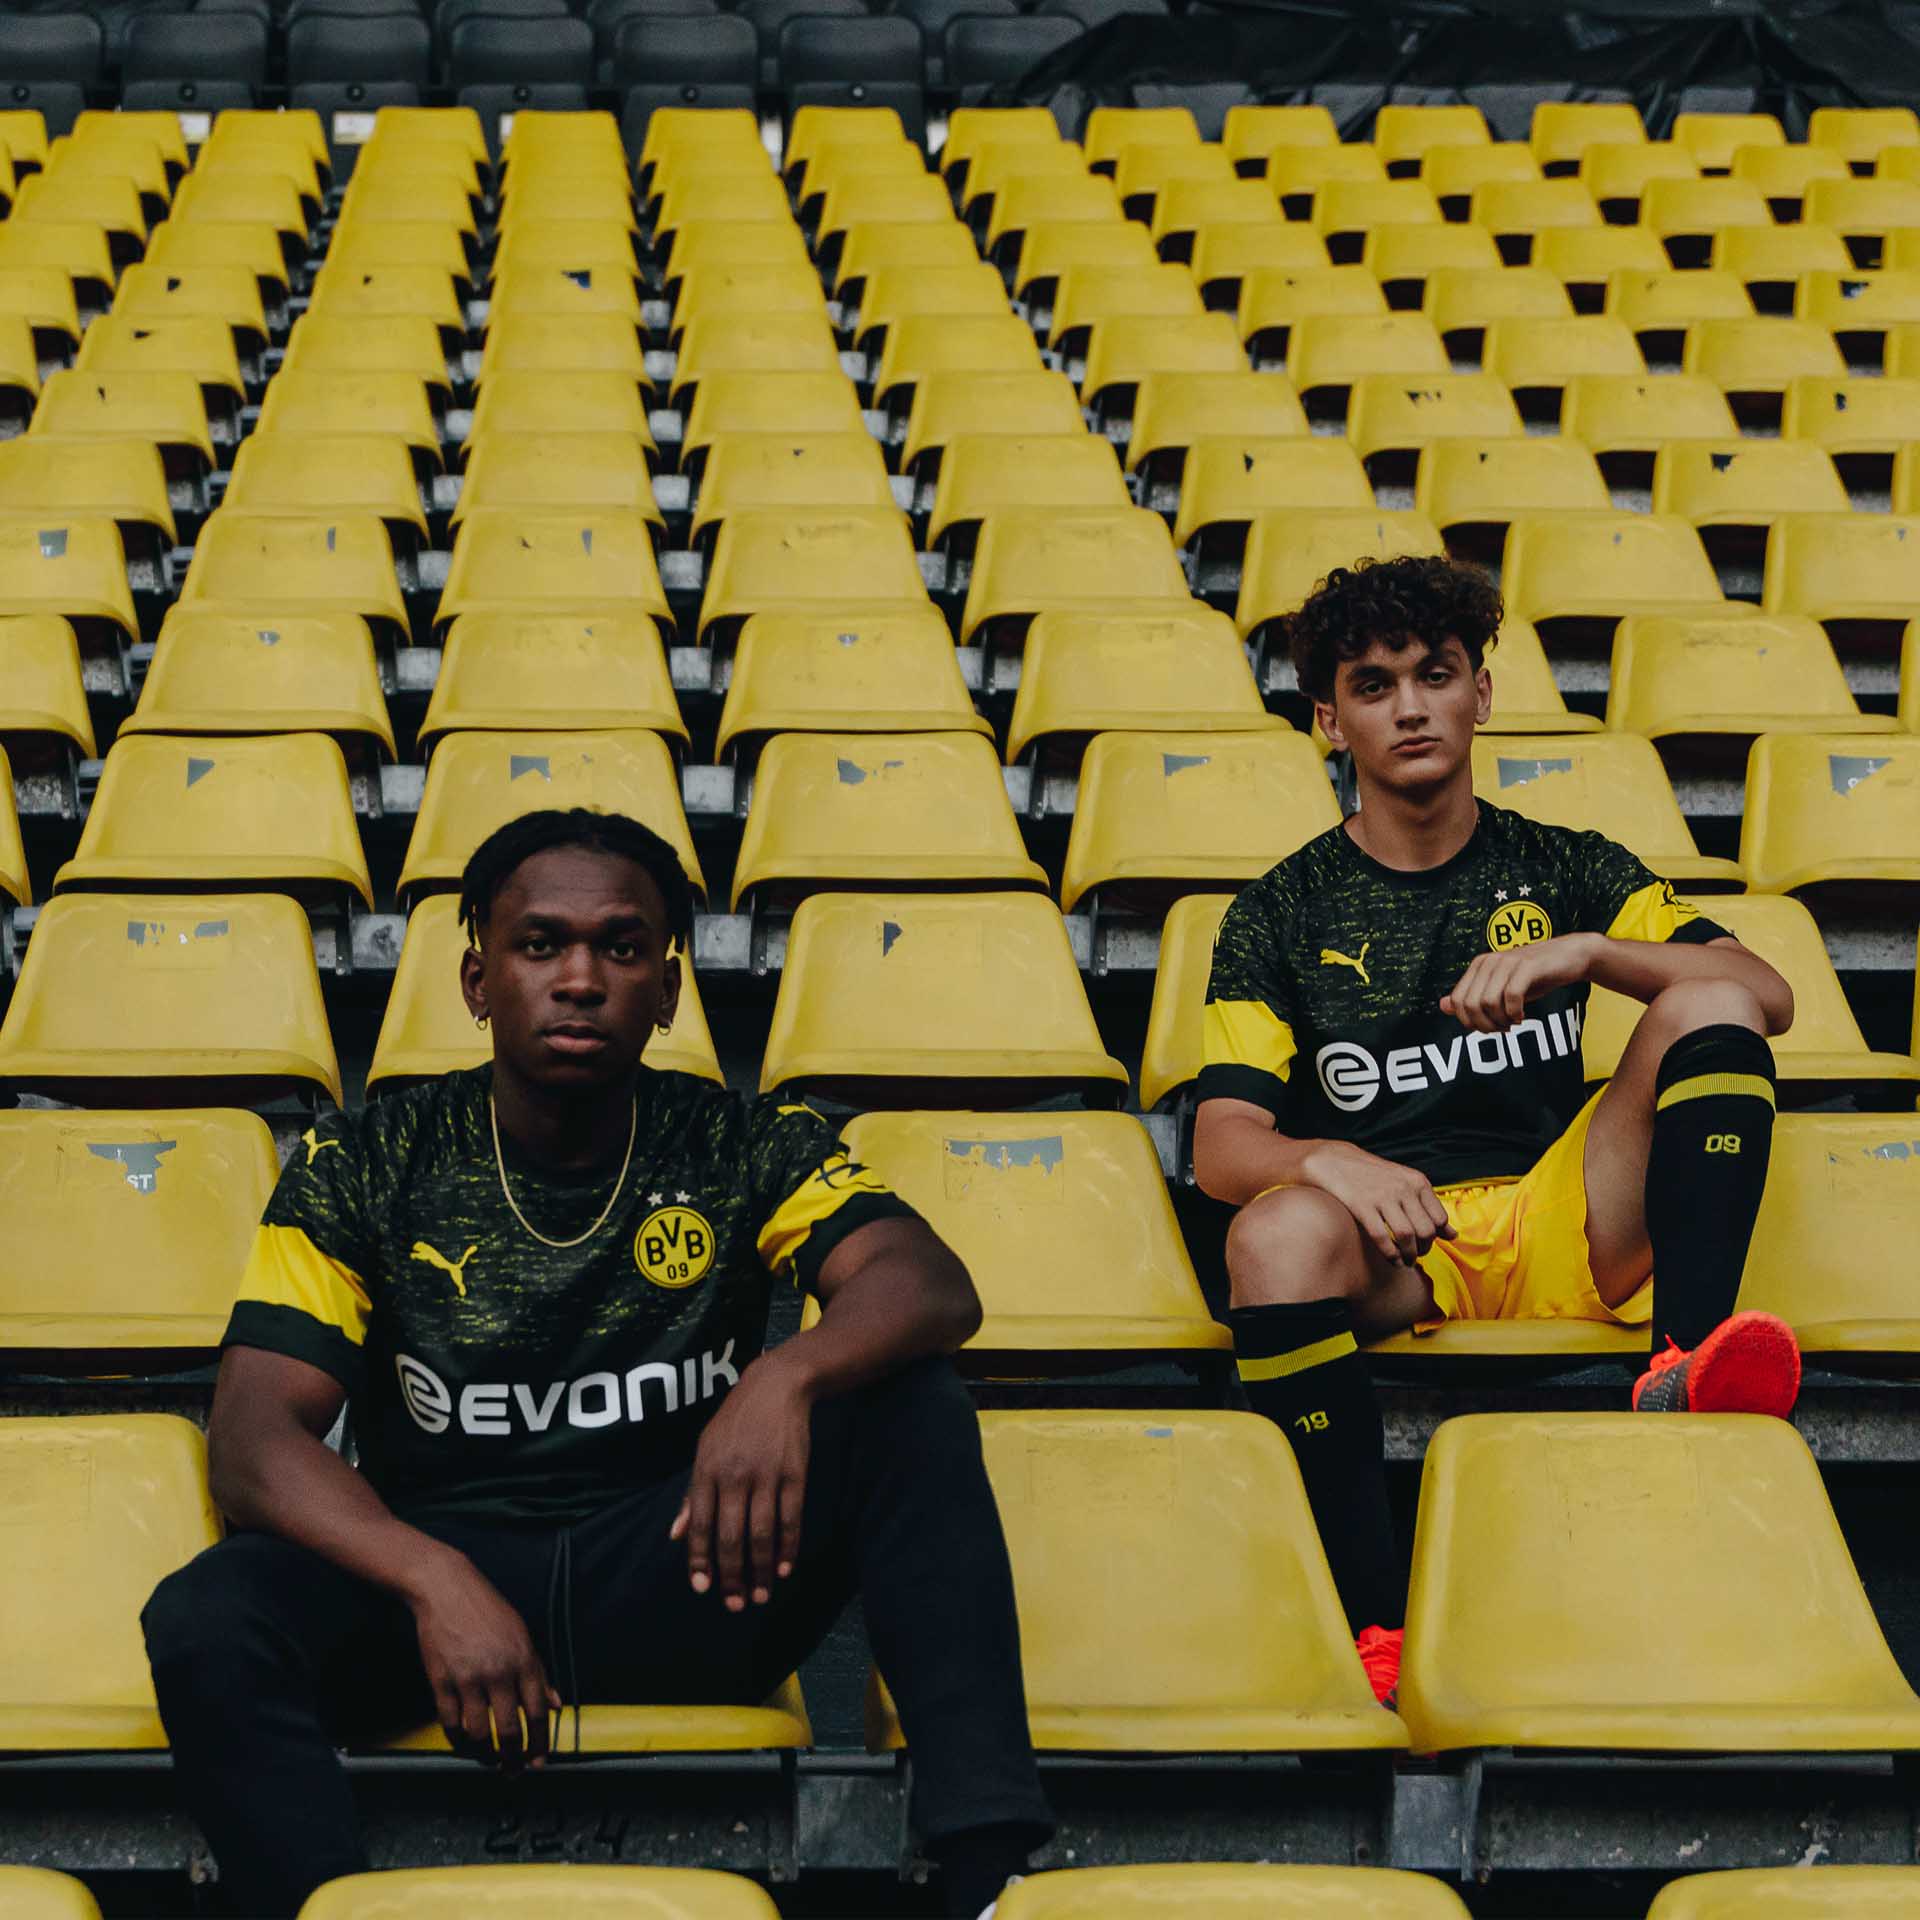 Borussia Dortmund 2018-19 Kits (PUMA)